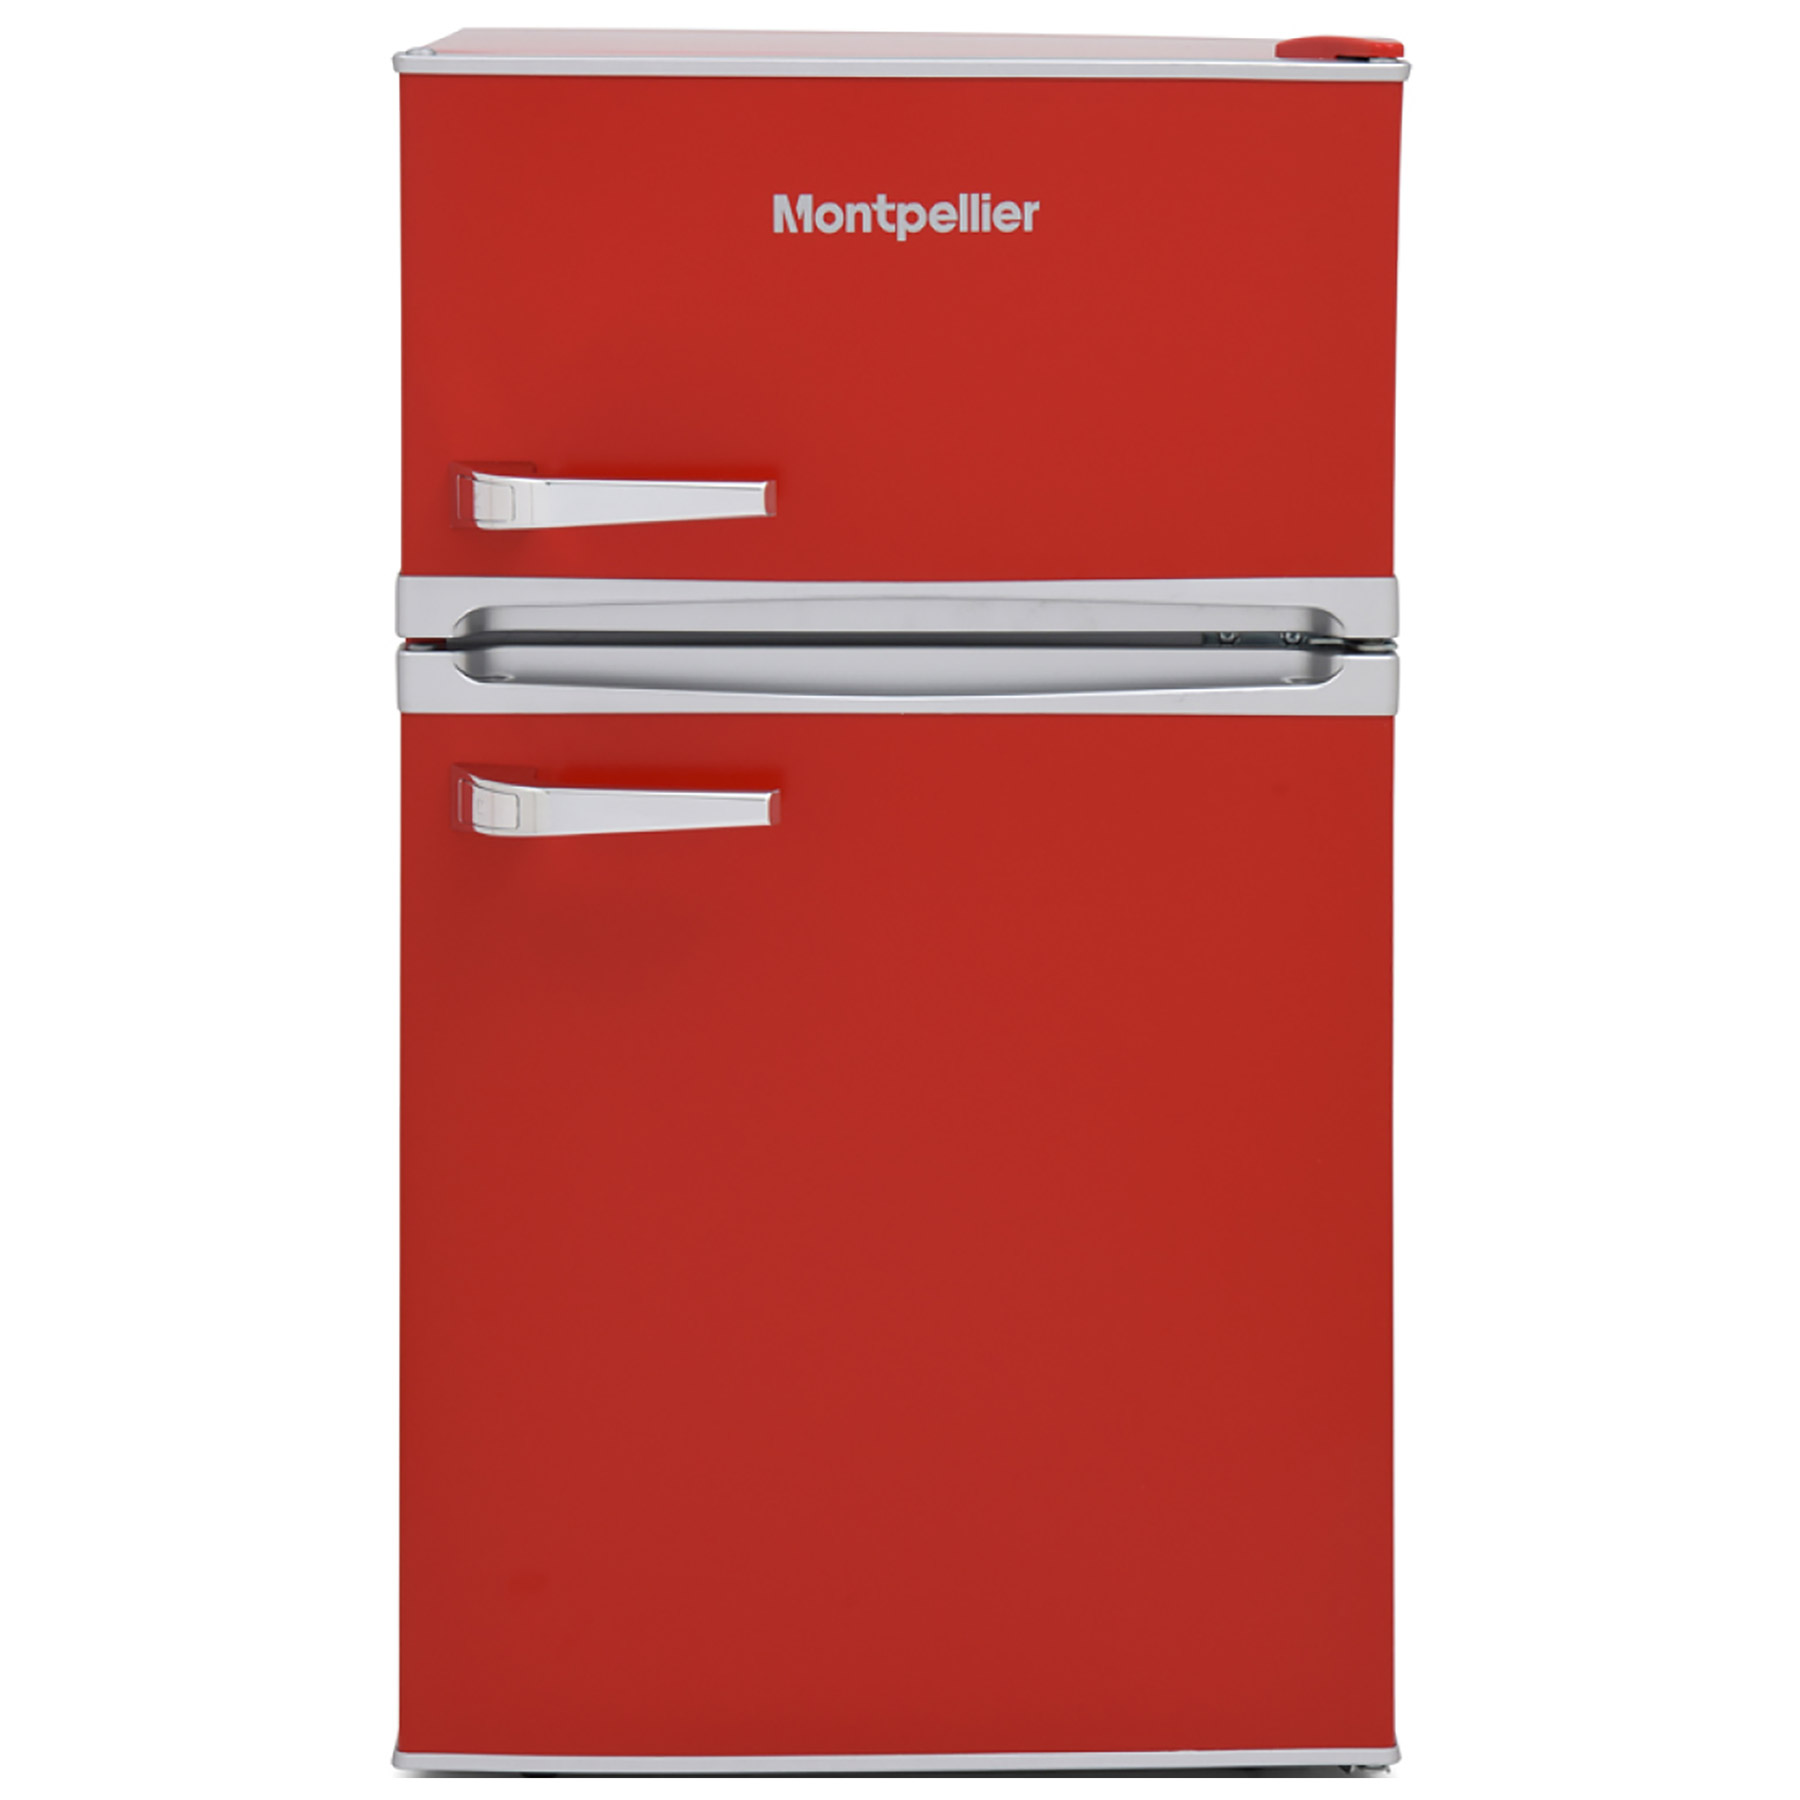 Image of Montpellier MAB2035R 48cm Undercounter Retro Fridge Freezer in Red 0 8